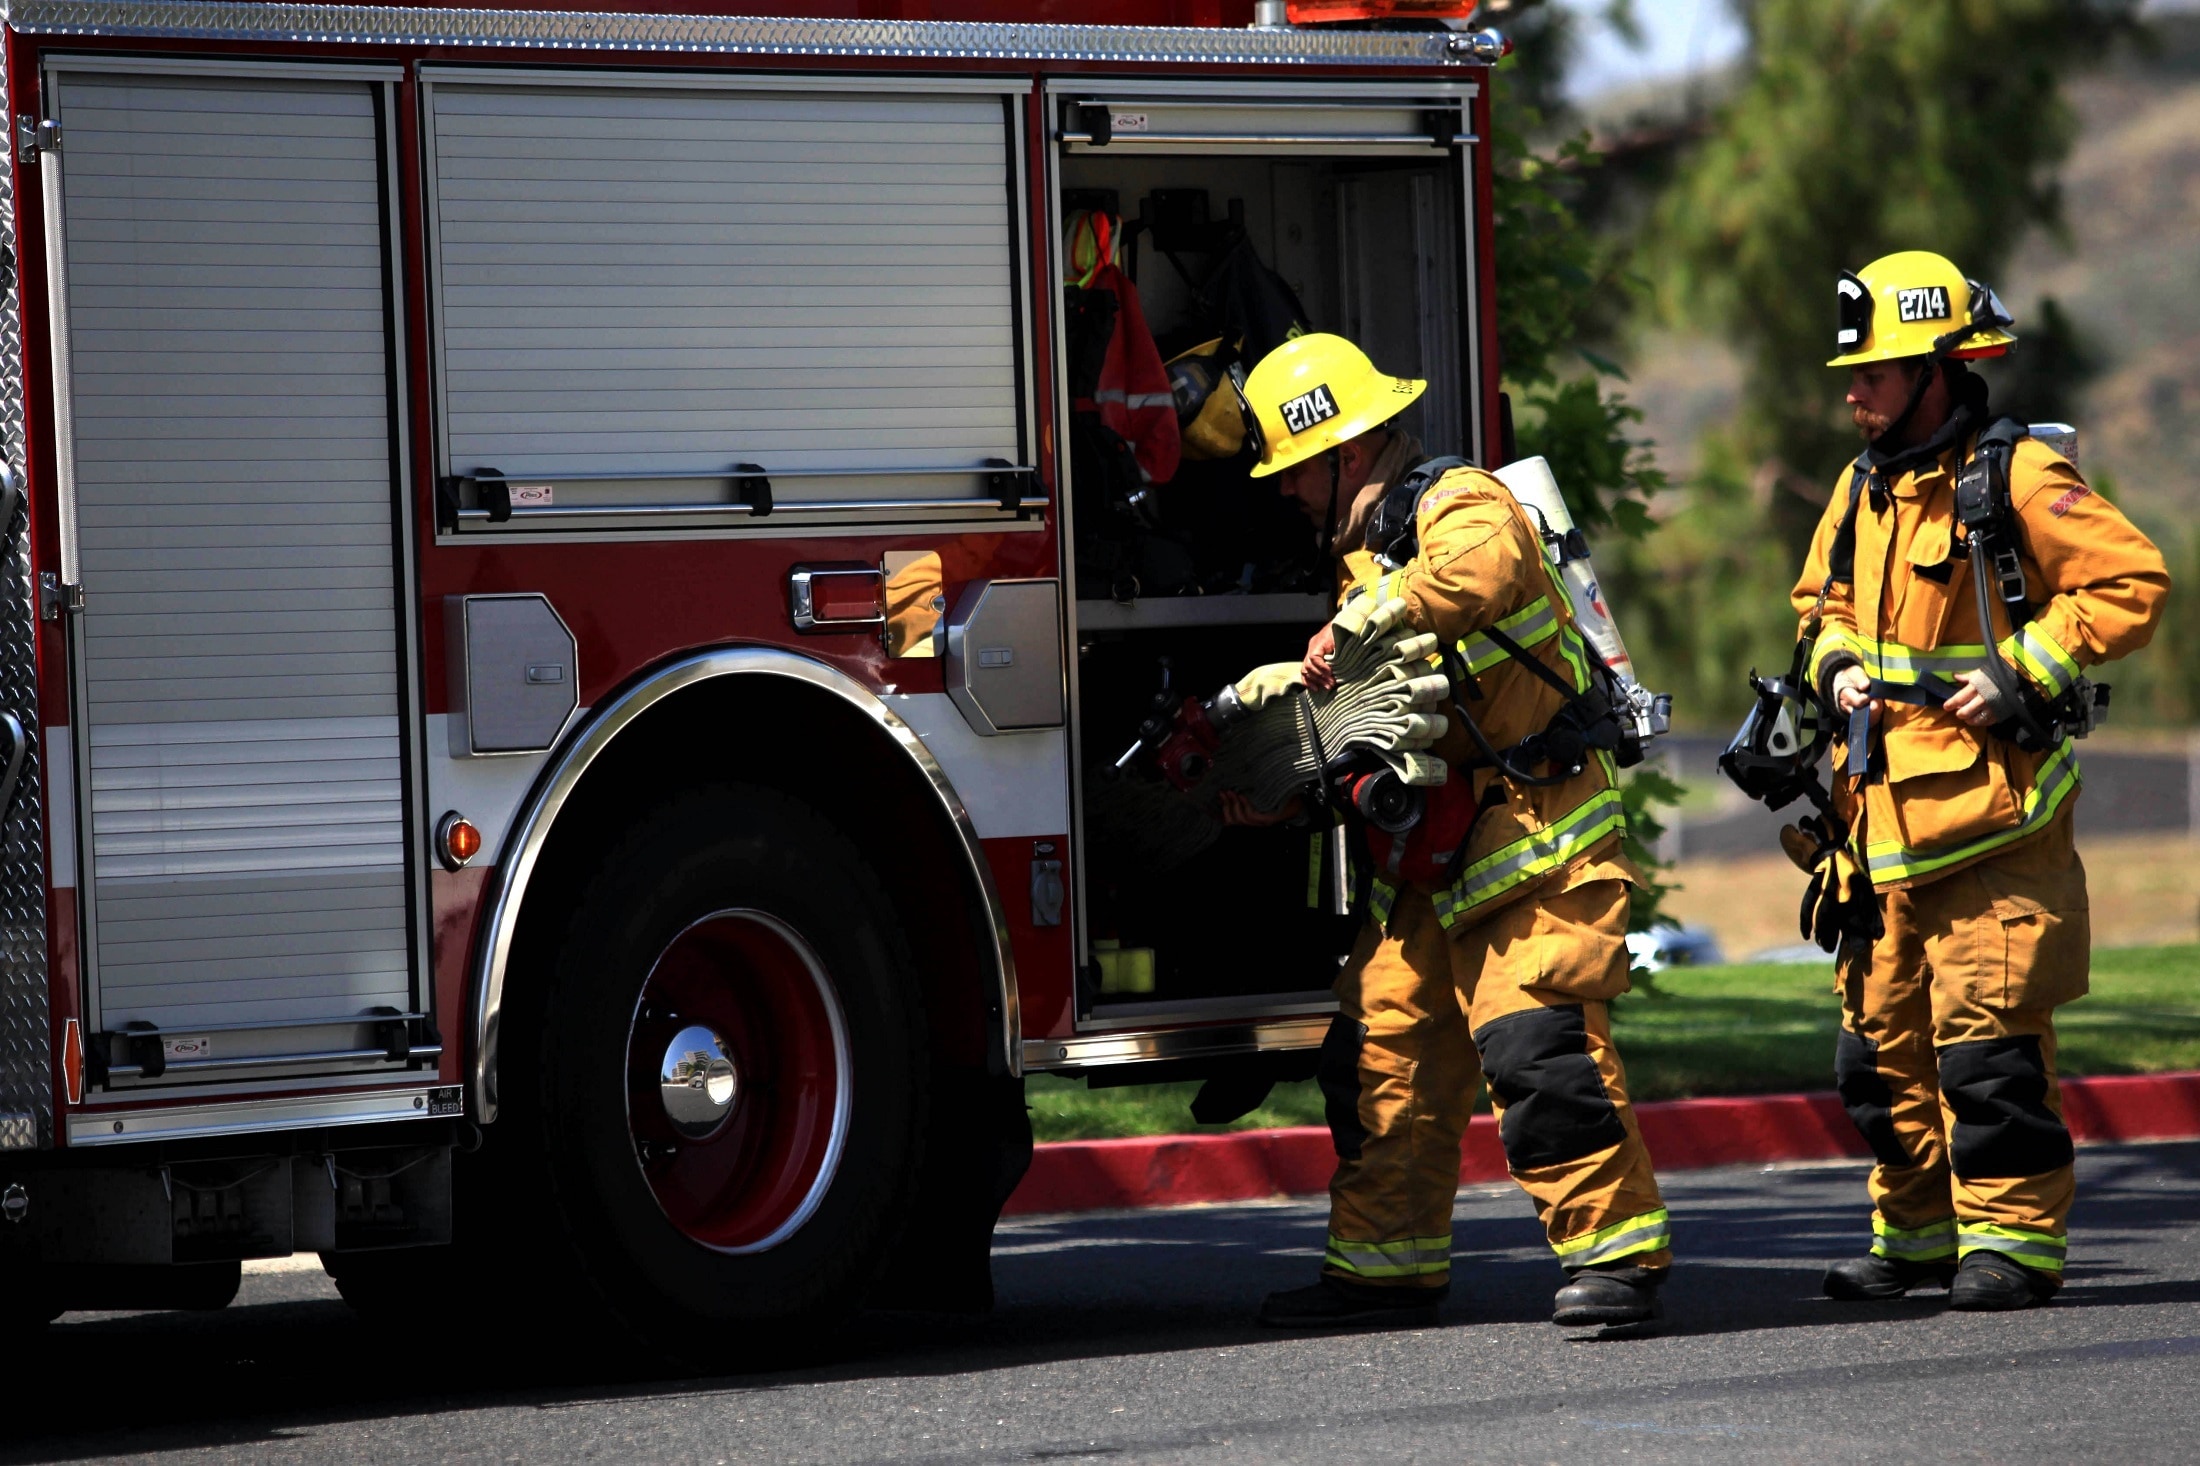 Fire Truck, Fire, Firefighters, danger, helmet